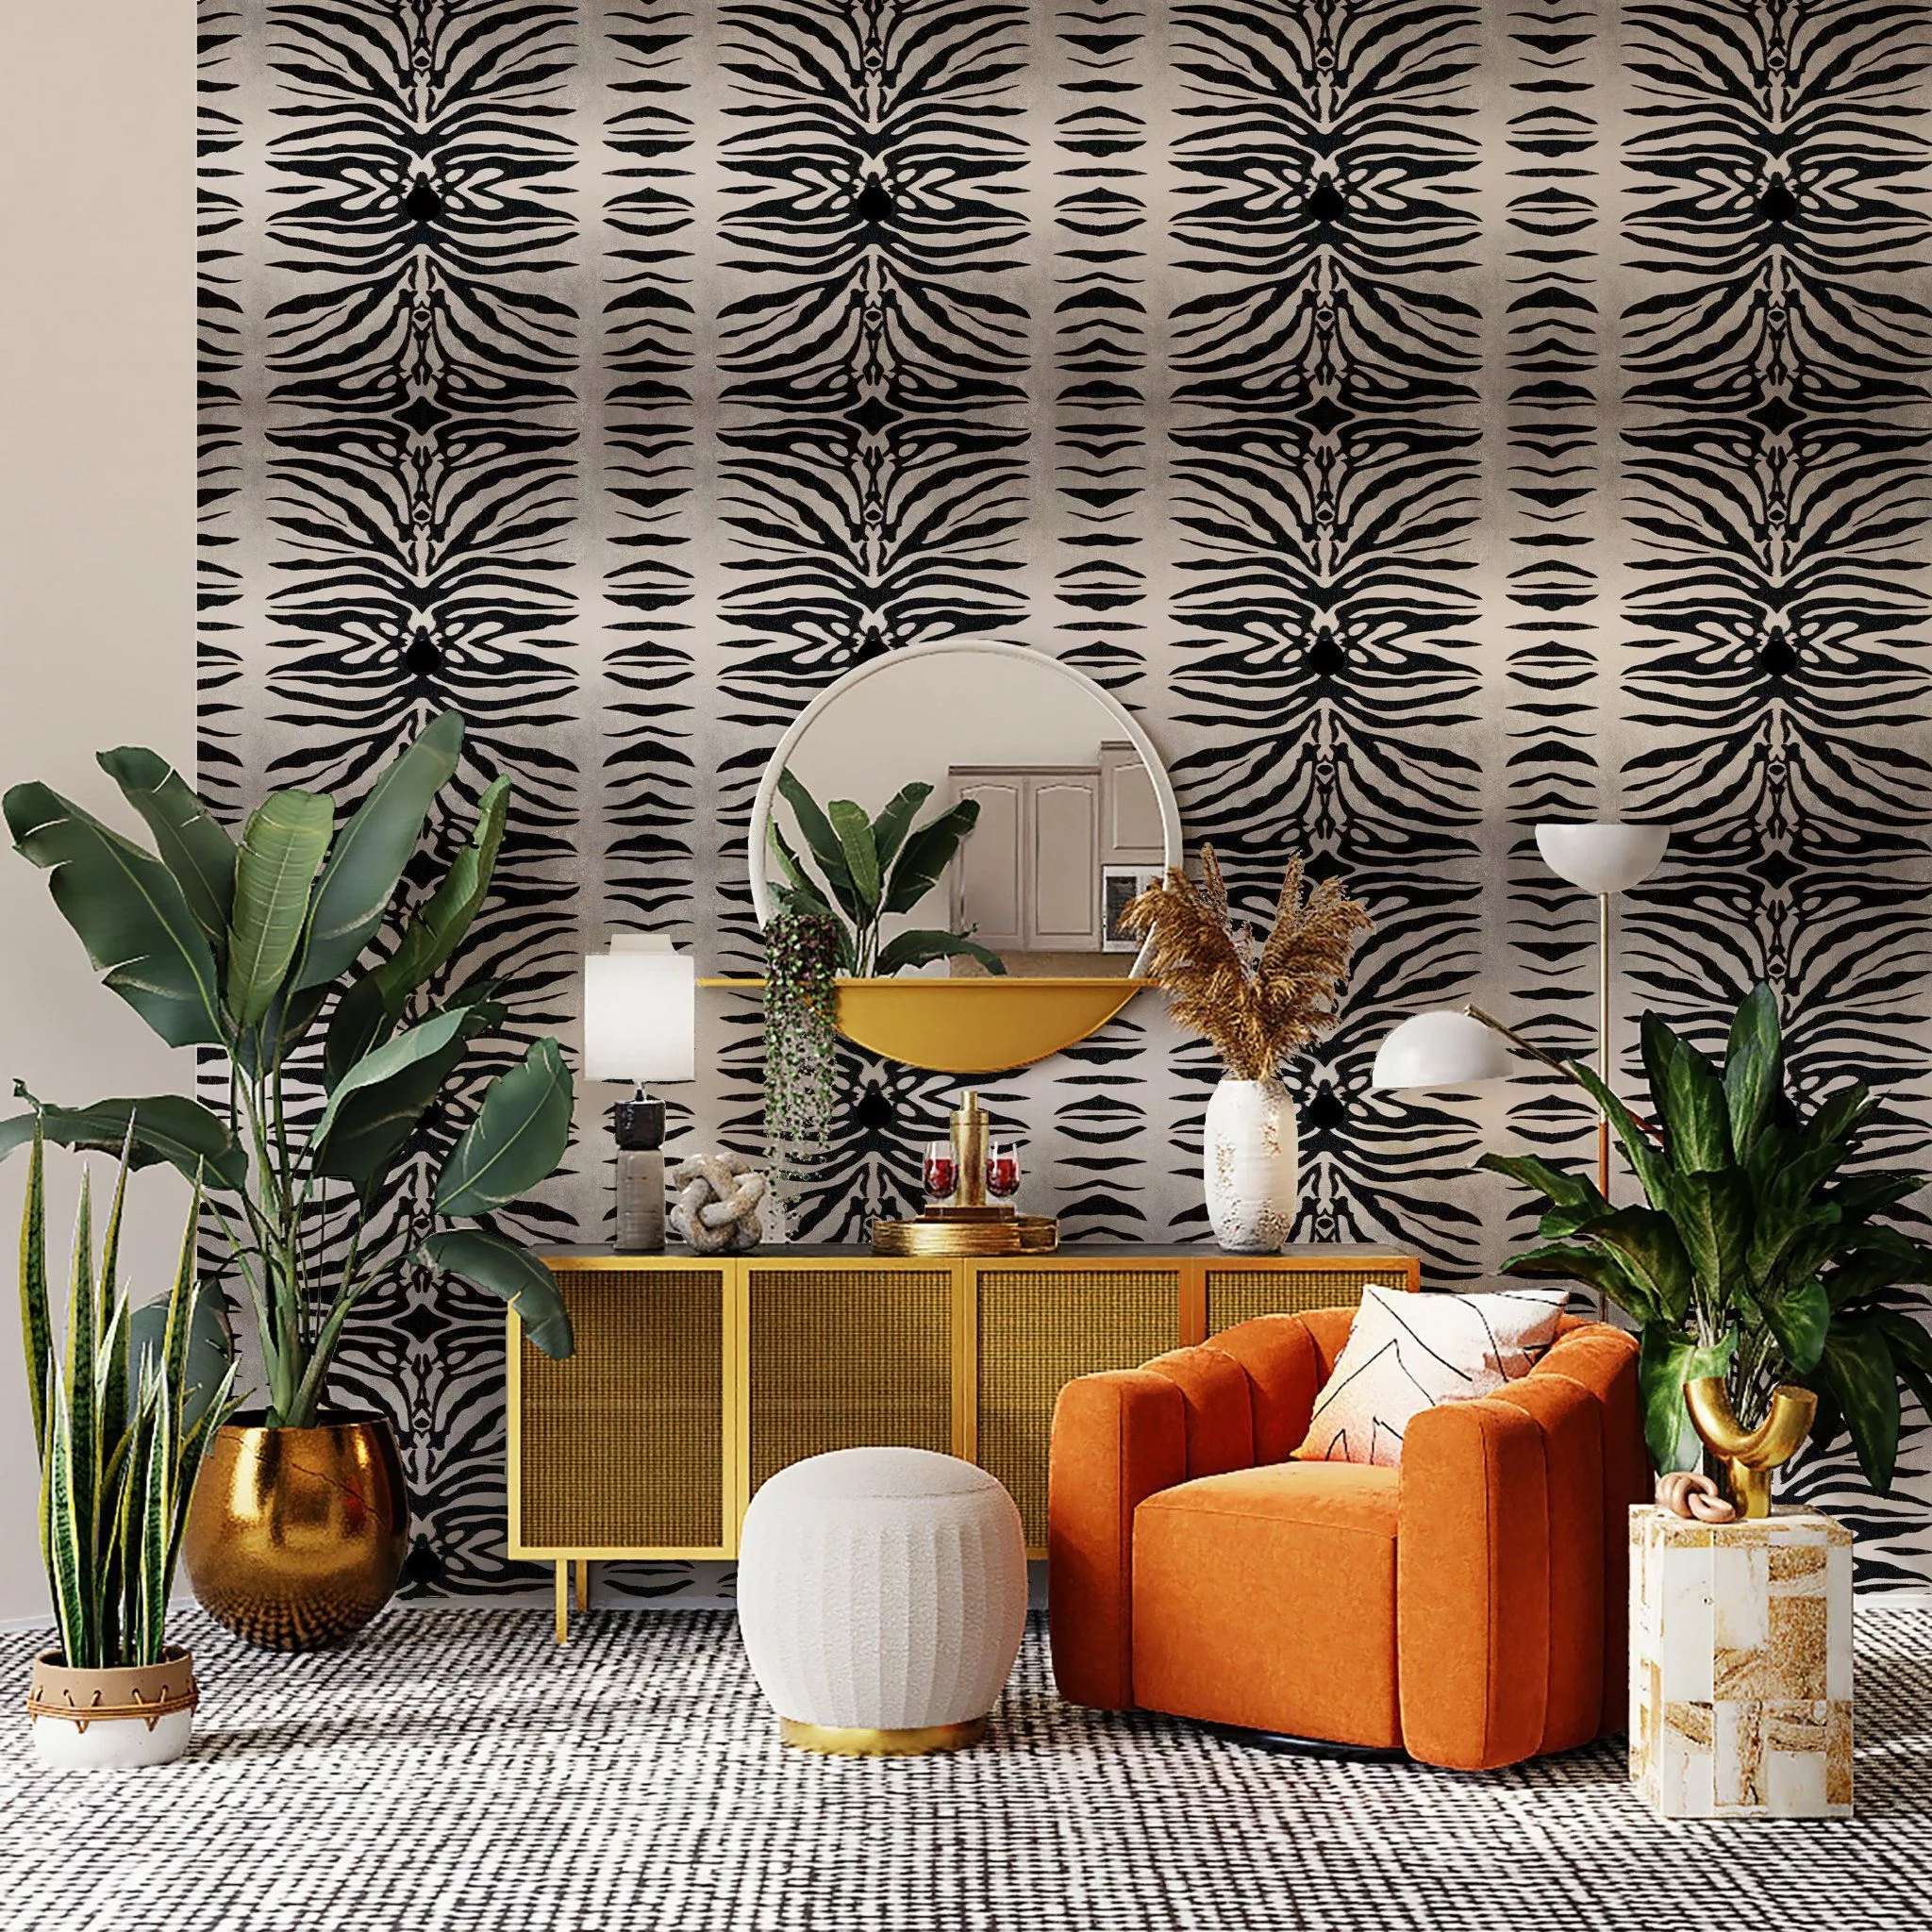 Avalana Design Zebra print wallpaper with orange accent chair